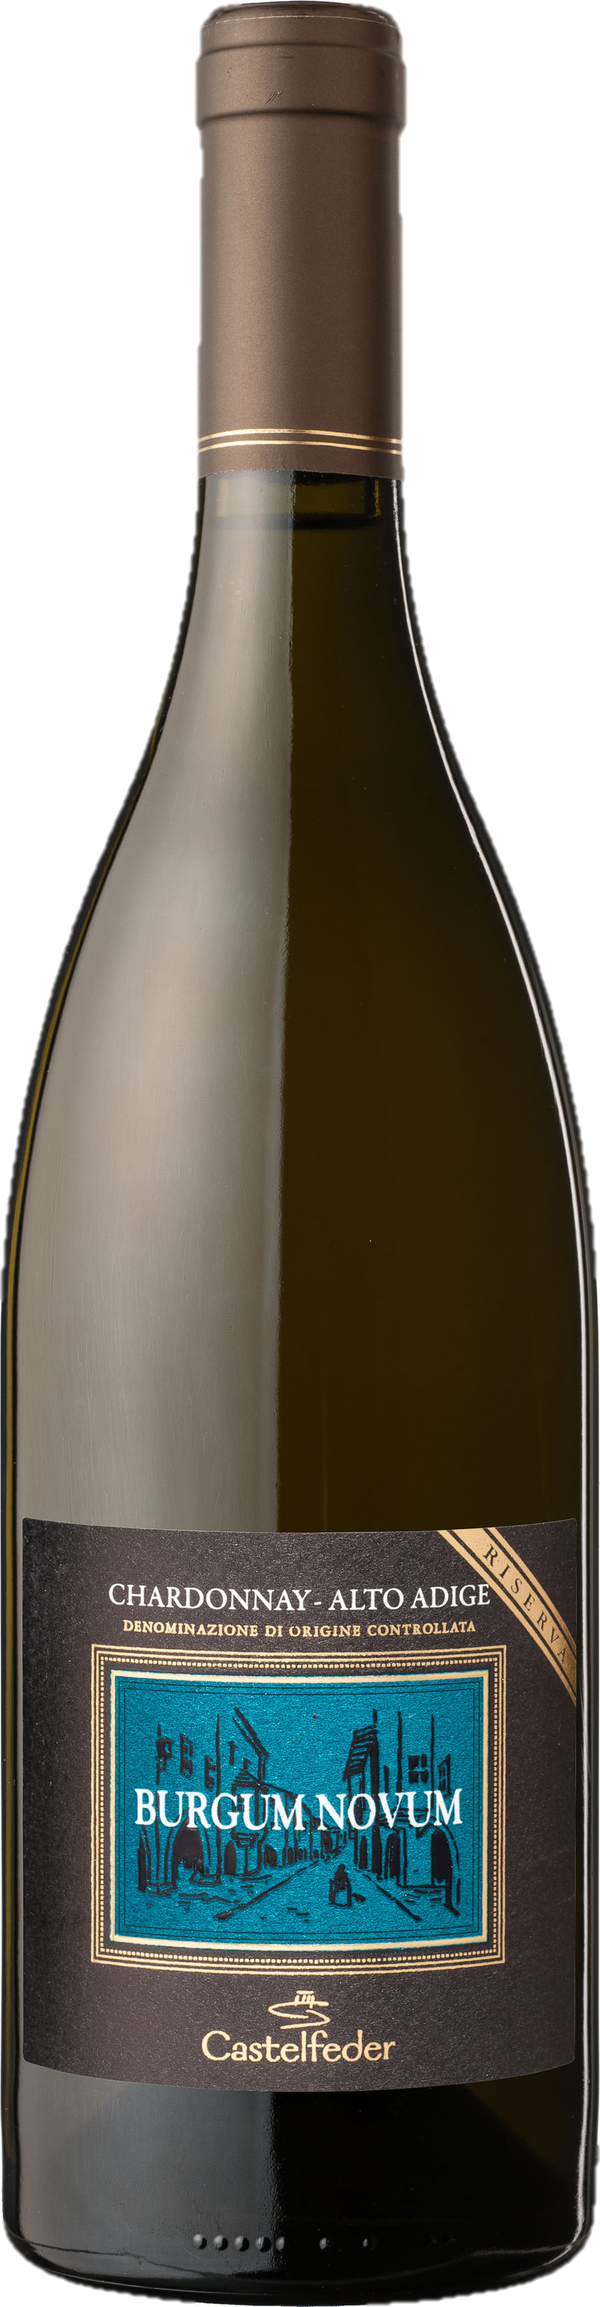 Chardonnay Riserva "BURGUM NOVUM" 2017 Castelfeder